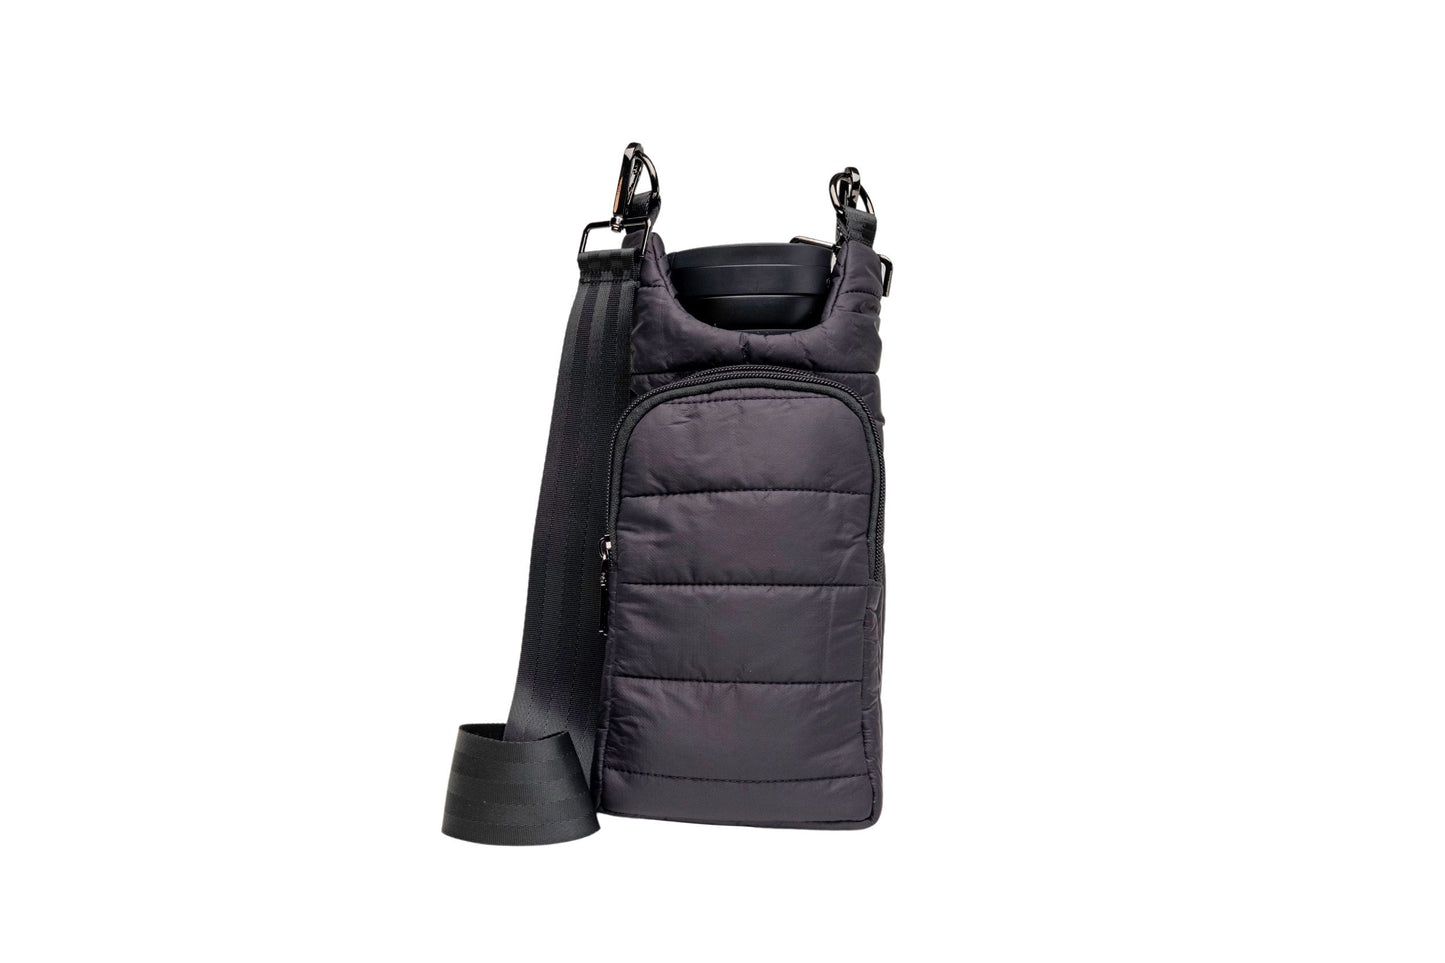 Wholesale Packs (2, 6, or 10) - Black Matte HydroBag with Black Strap